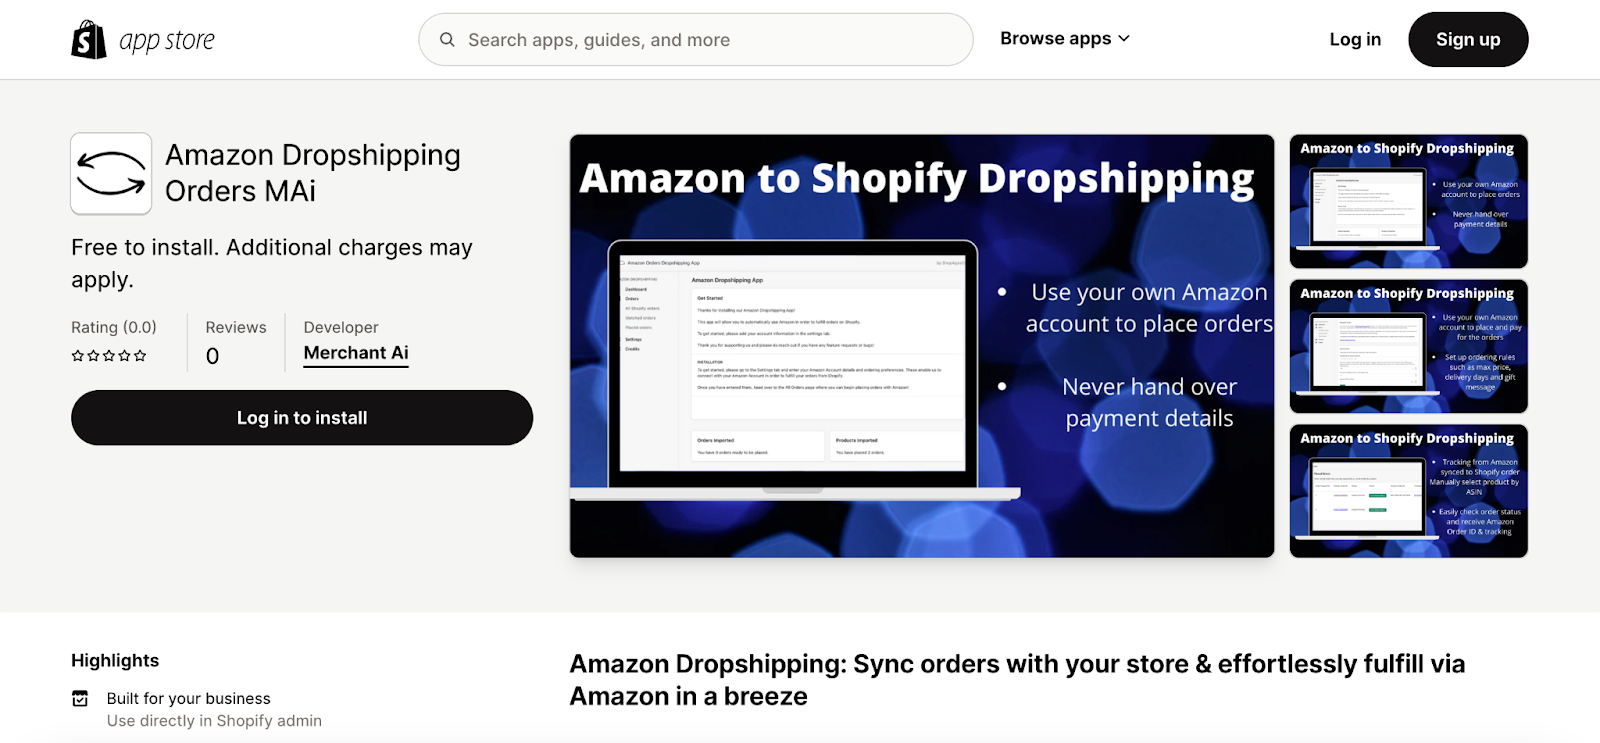 Amazon Dropshipping Orders MAi